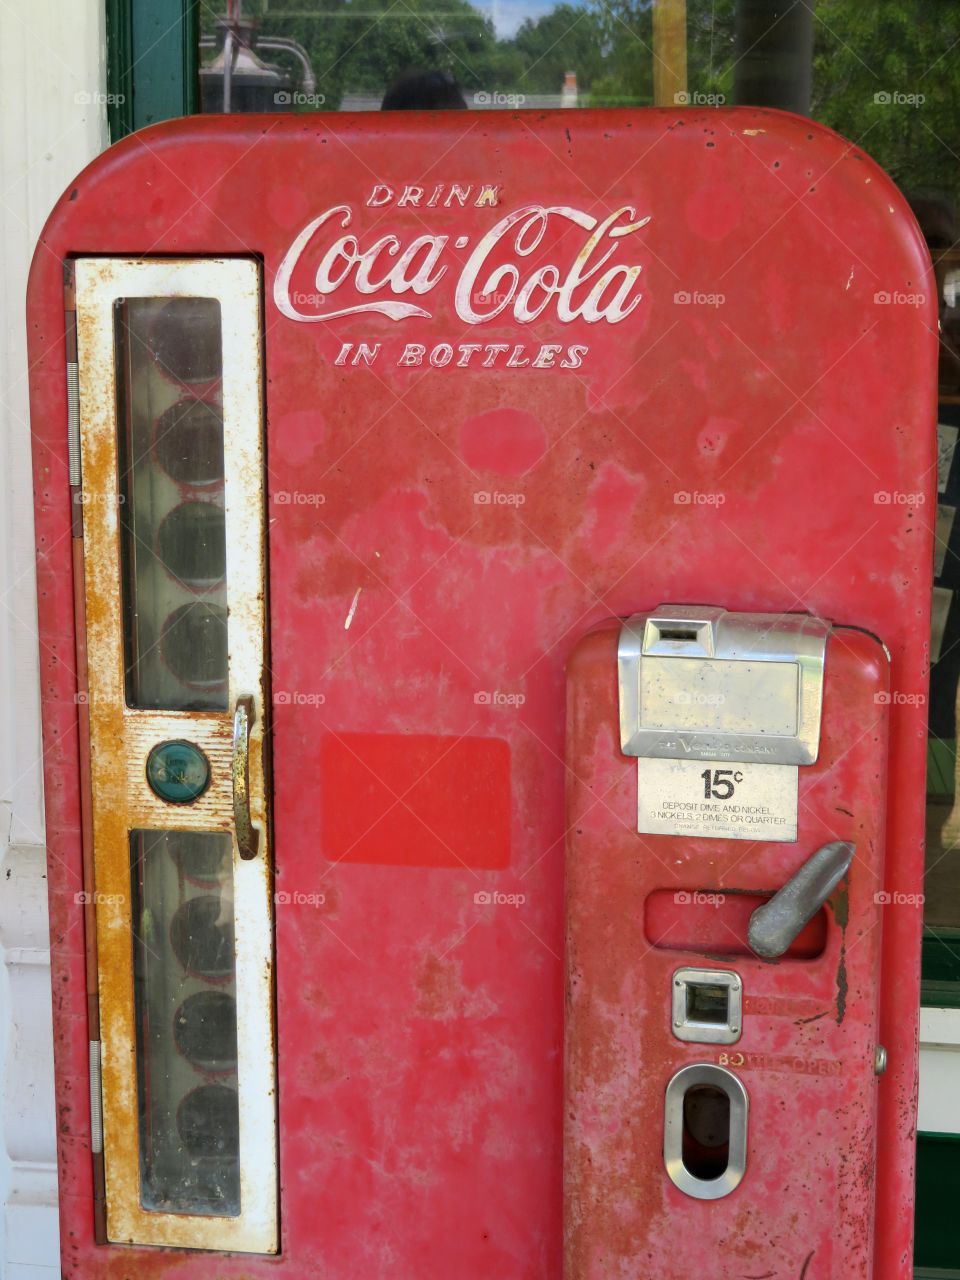 15-cent Coke